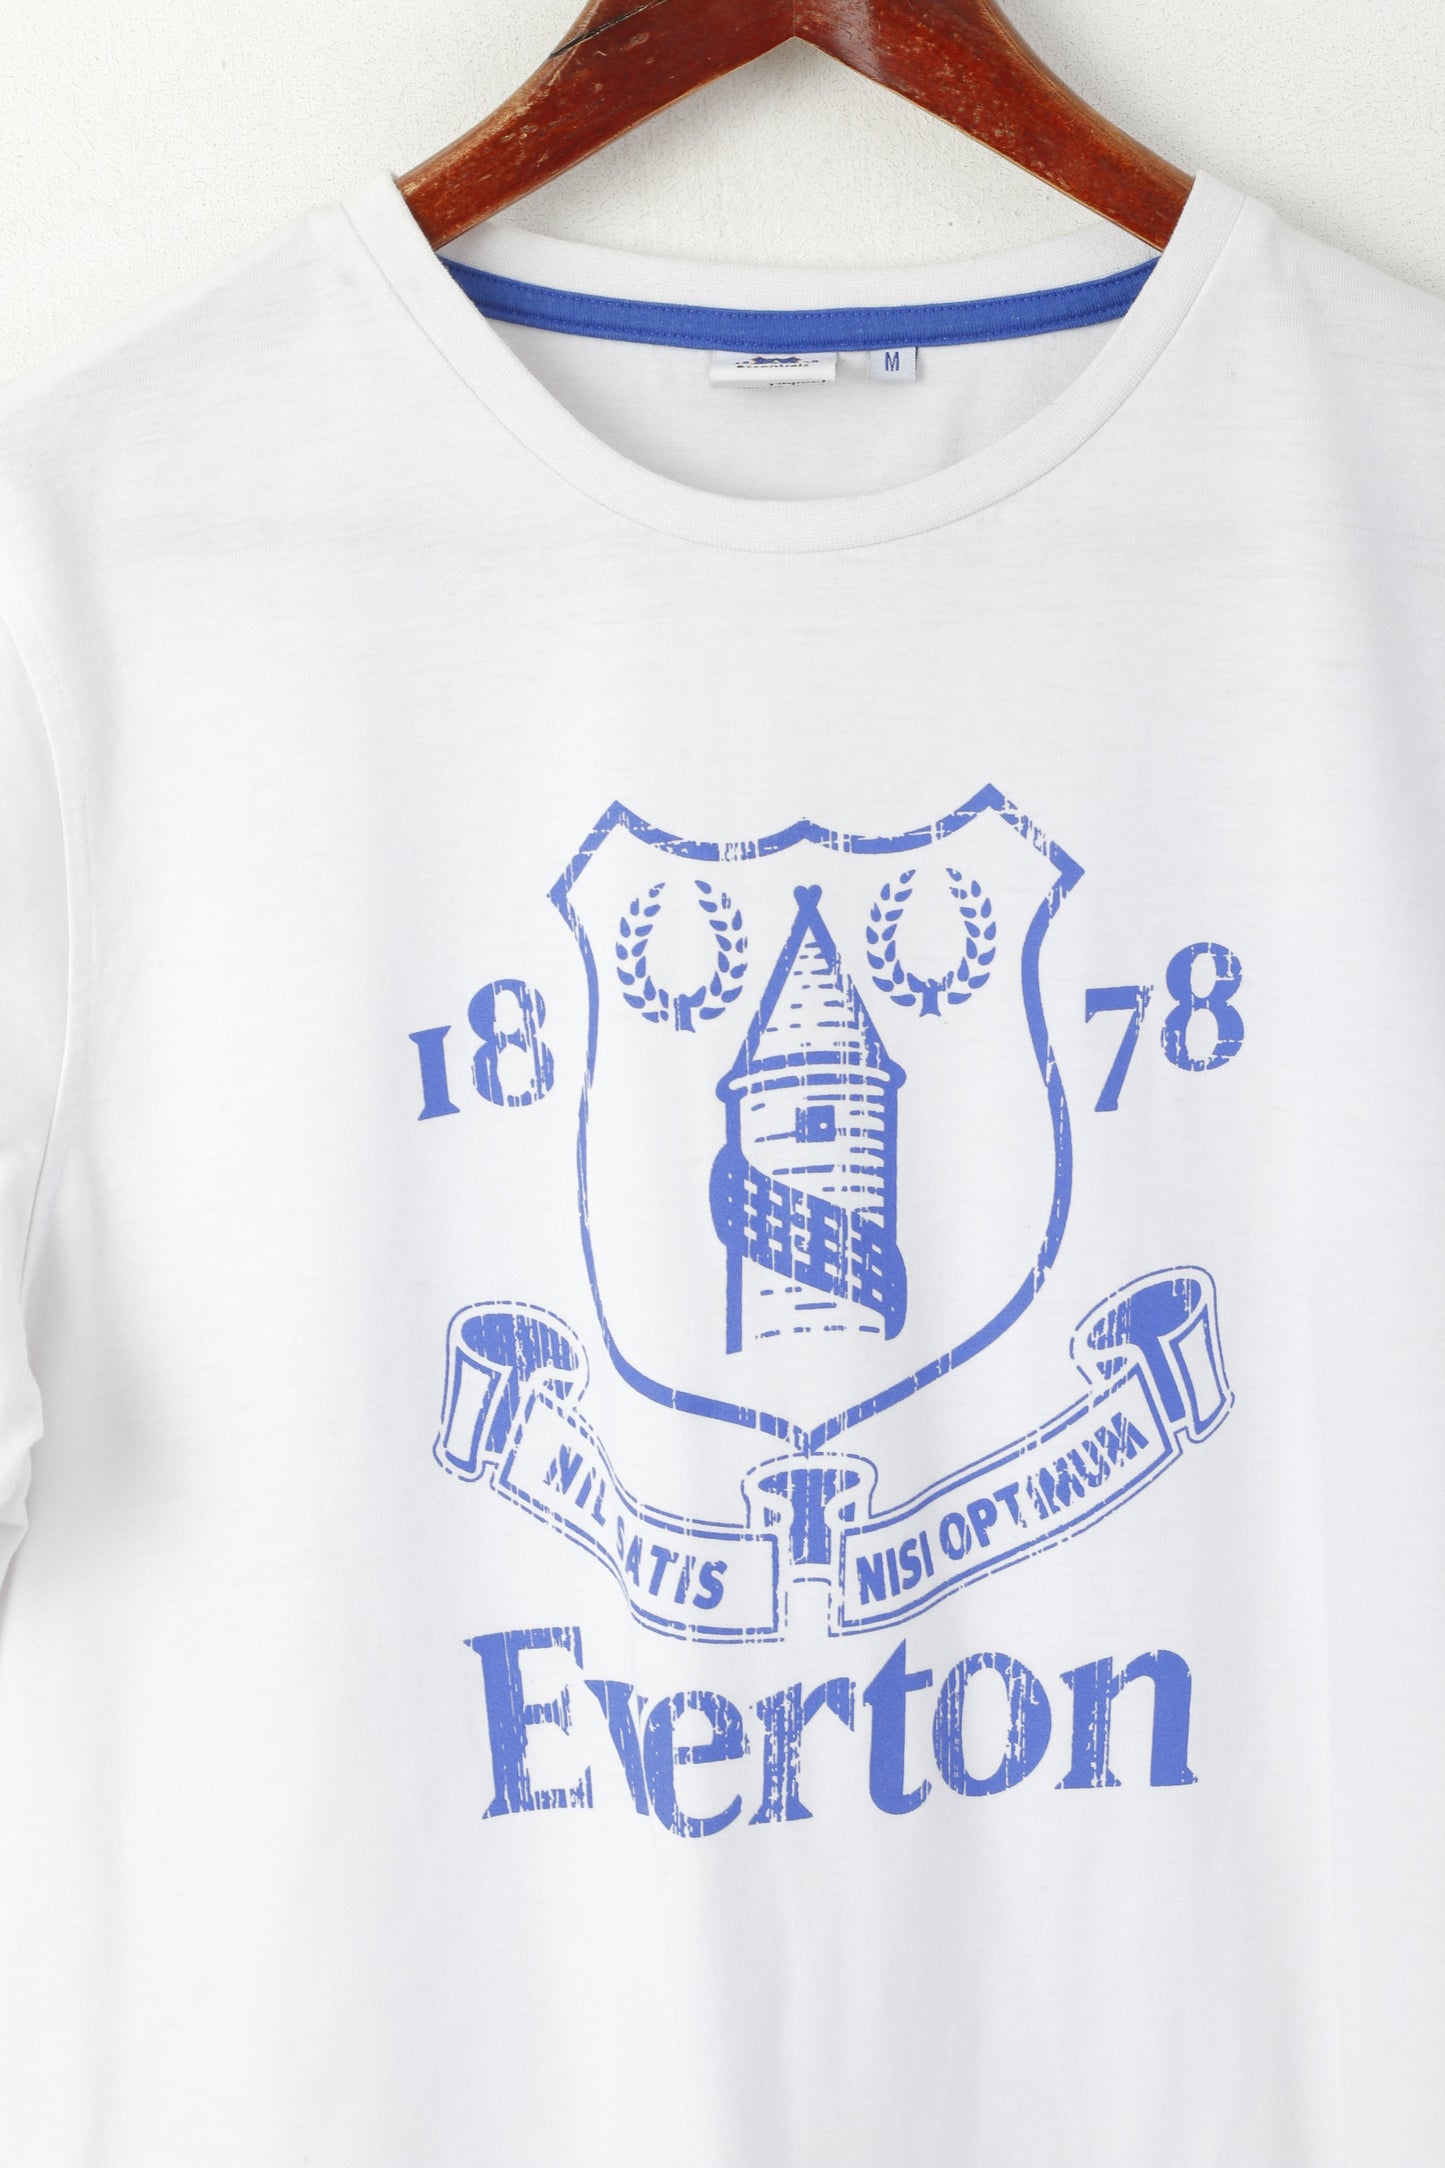 Everton Men M T- Shirt White Cotton Football Club Logo Sportswear Top